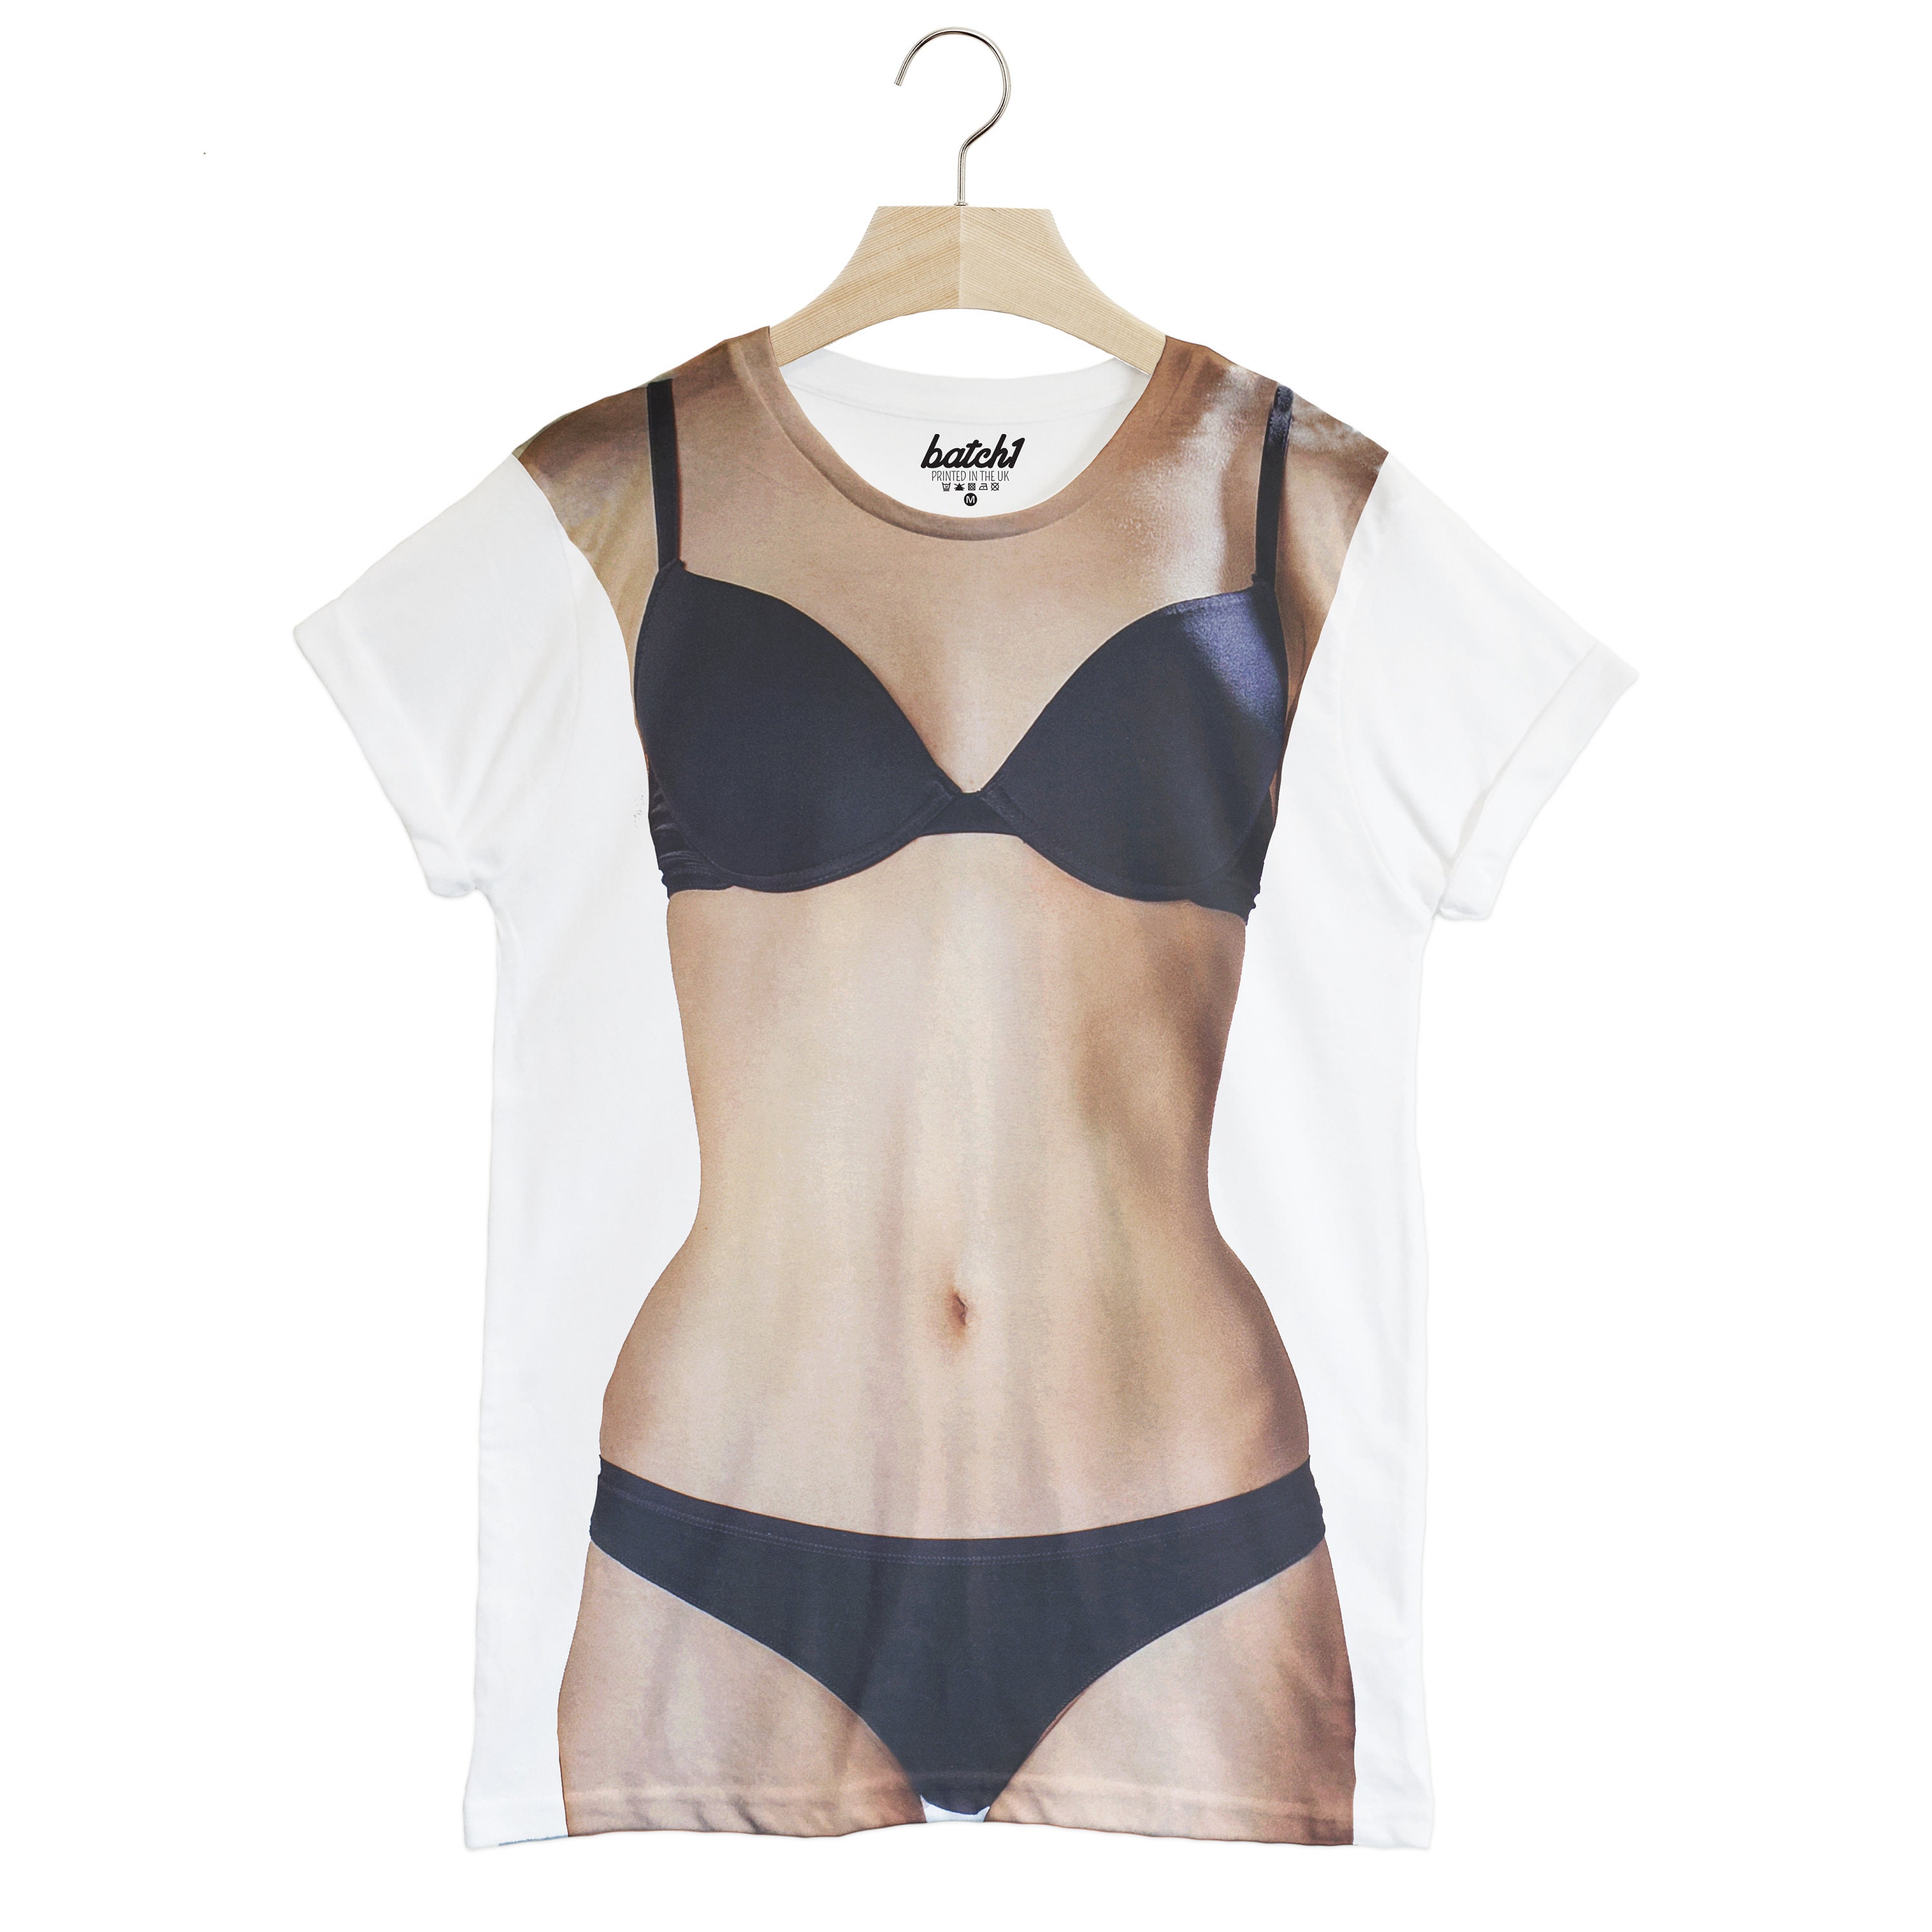 Bikini Body Over Photo Print Unisex Novelty Costume - Etsy